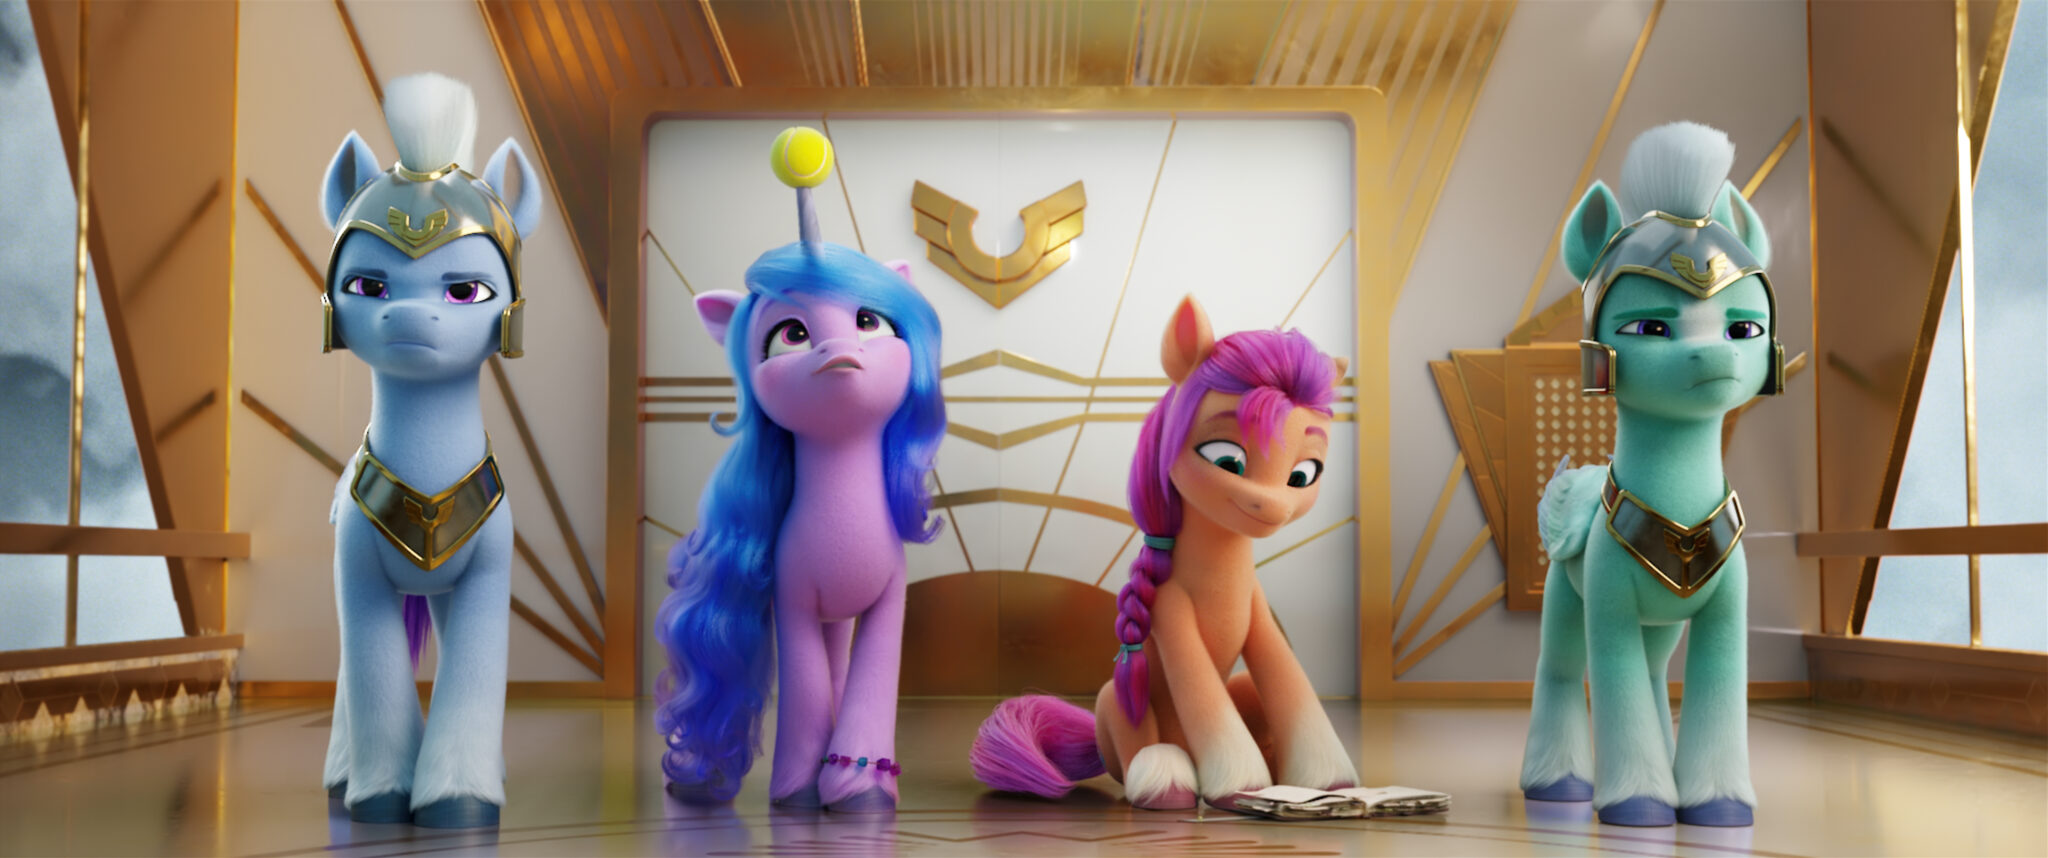 Vier bunte, animierte Ponys aus dem Animationsfilm My Little Pony